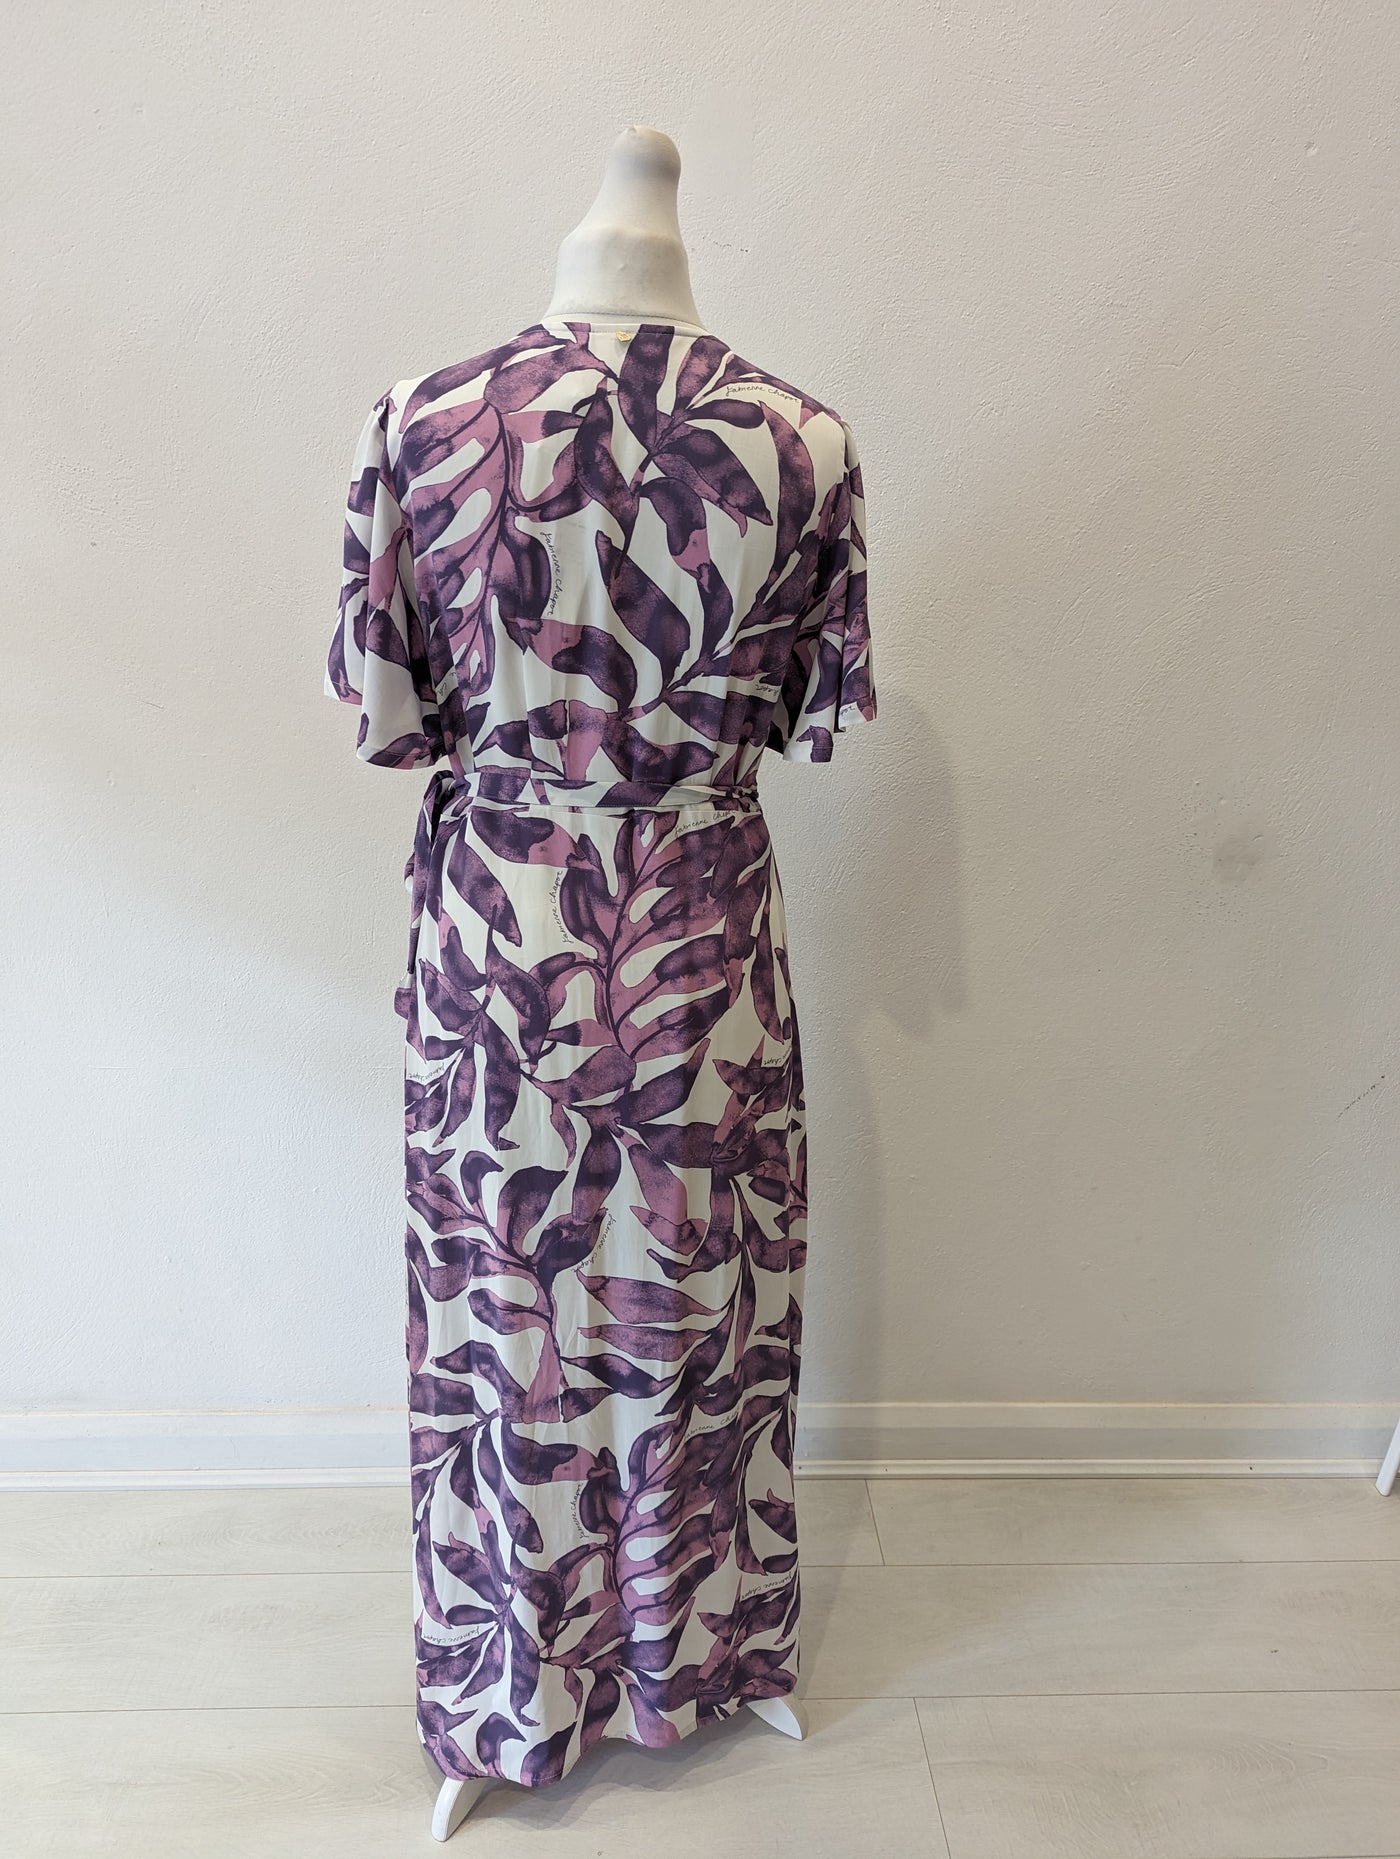 Fabienne Chapot Archana Dress 12 NWT £140